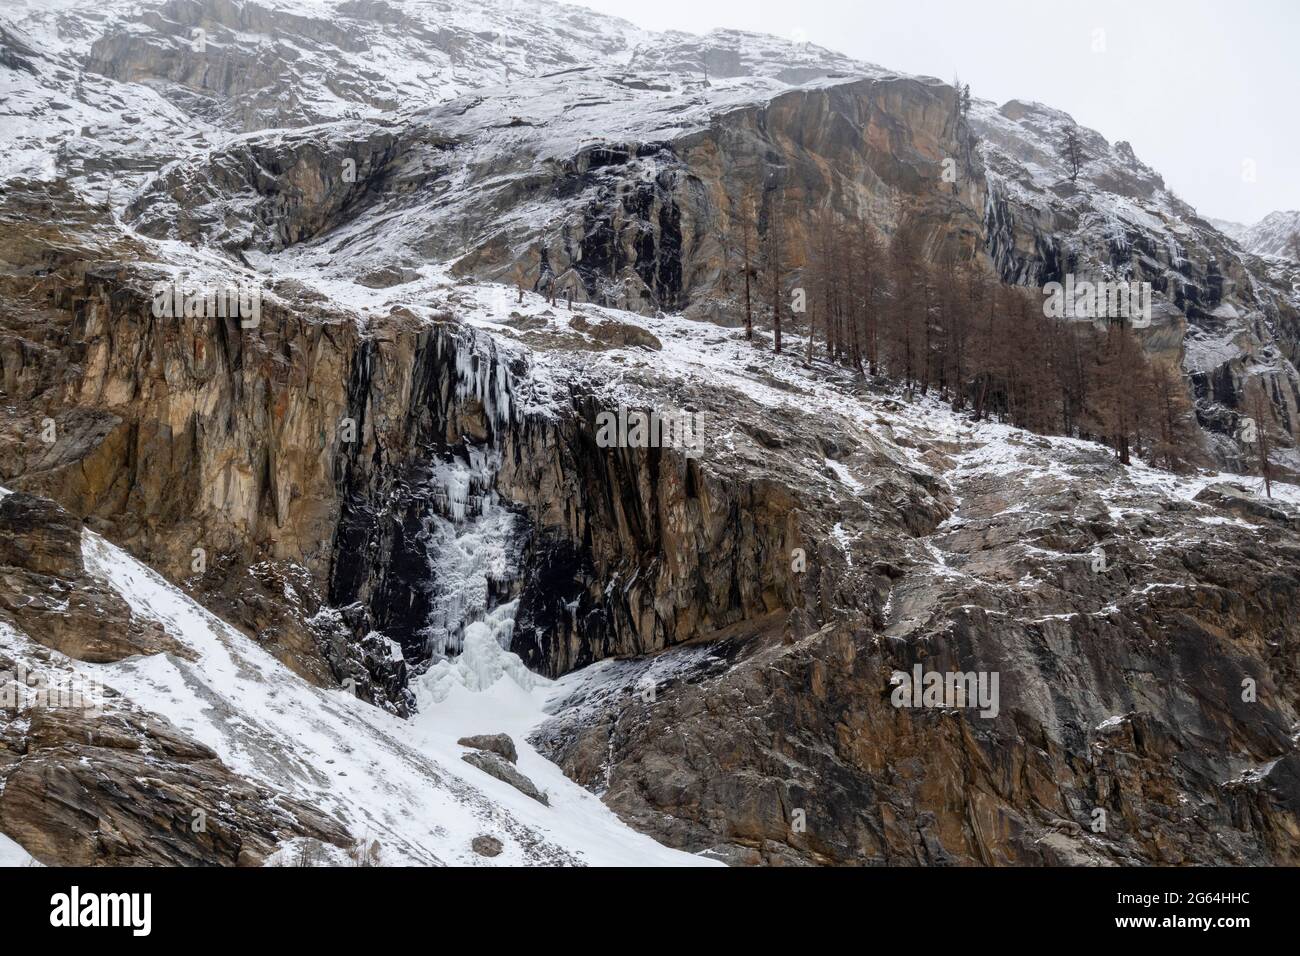 Gran Paradiso National Park, Aosta Valley, Italy. Stock Photo